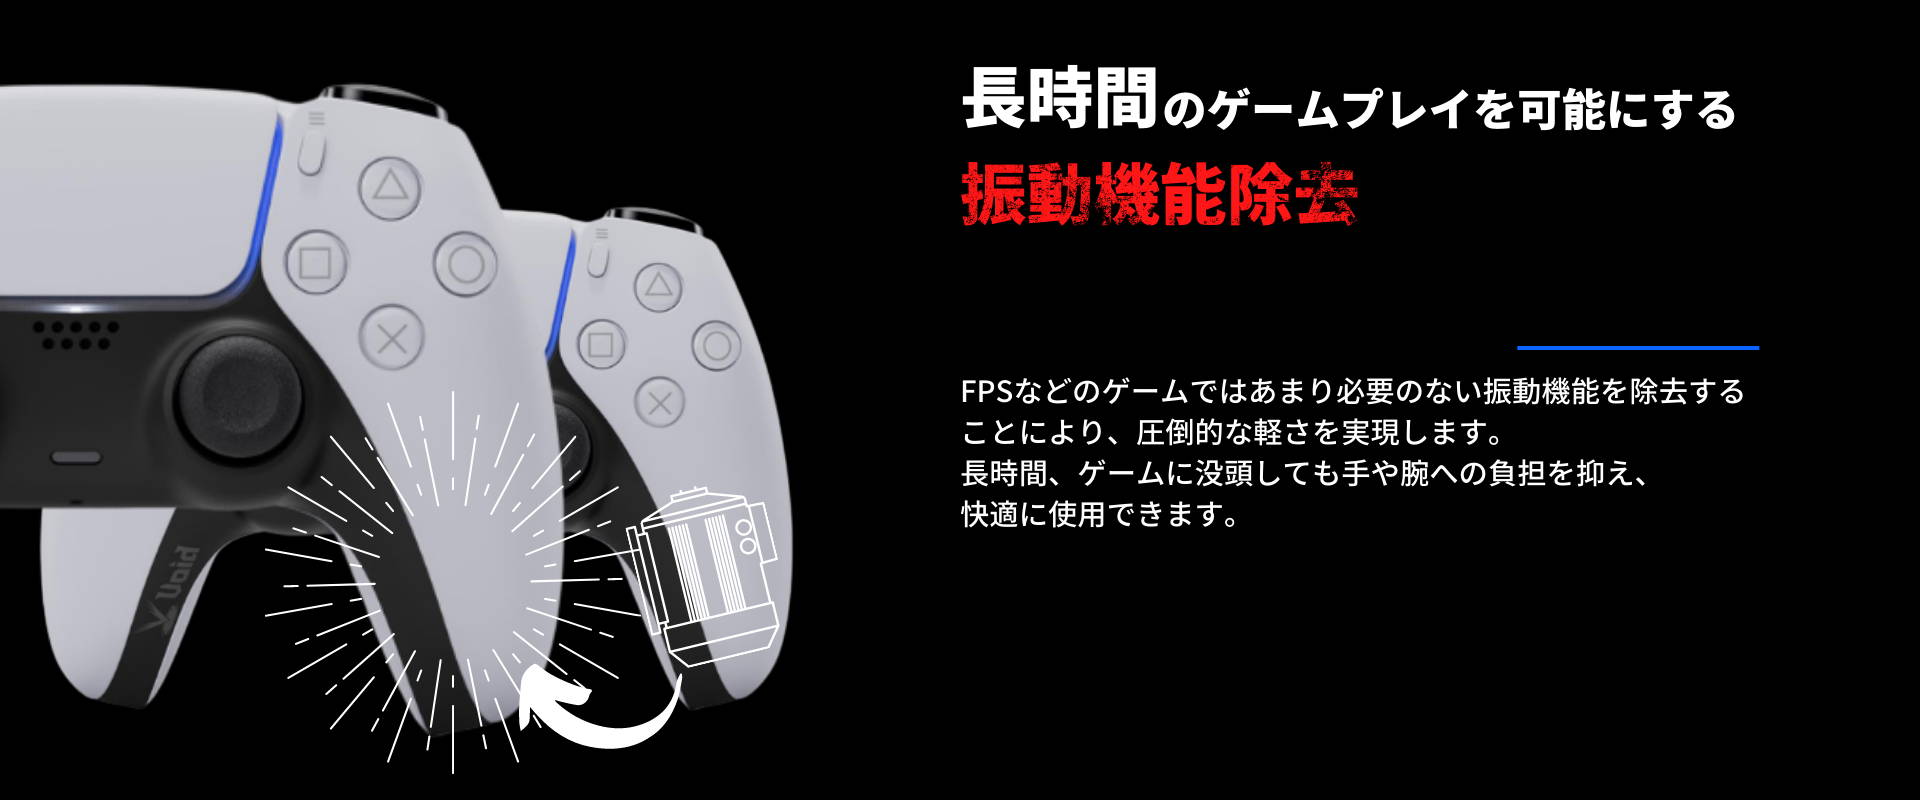 Void Gaming PS5用ボタンタイプコントローラー紹介